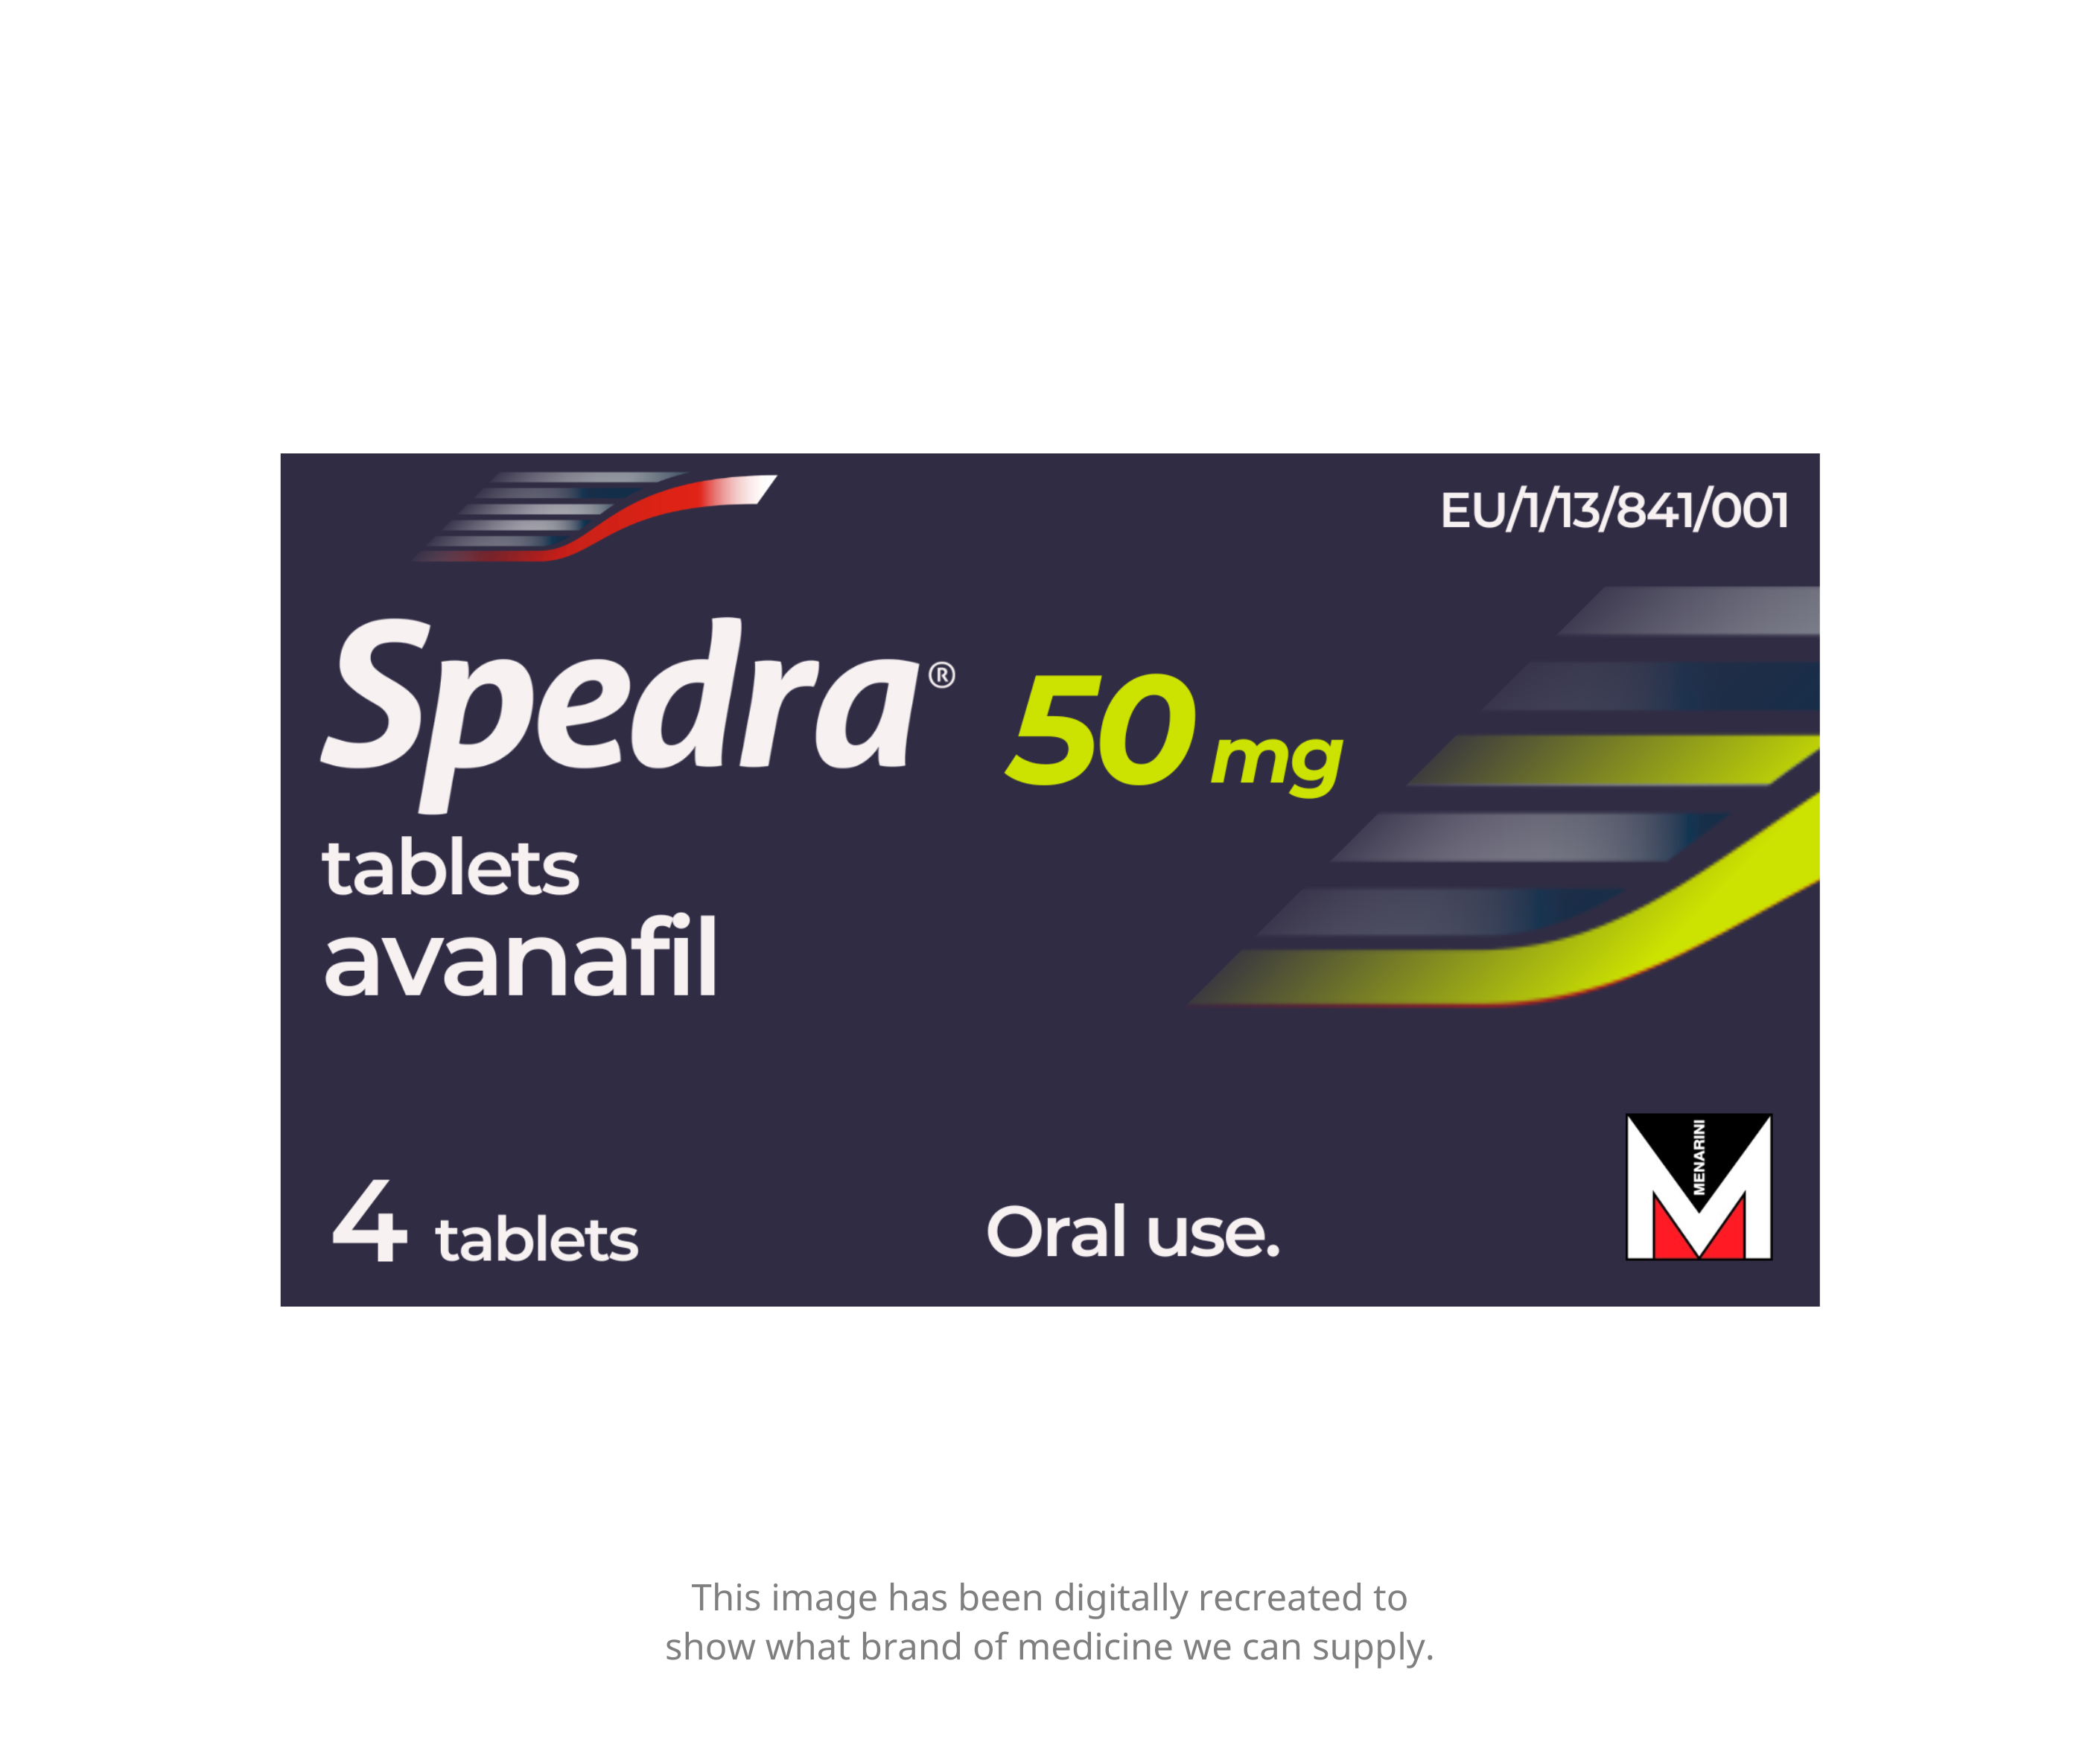 Spedra Avanafil 50mg example packaging